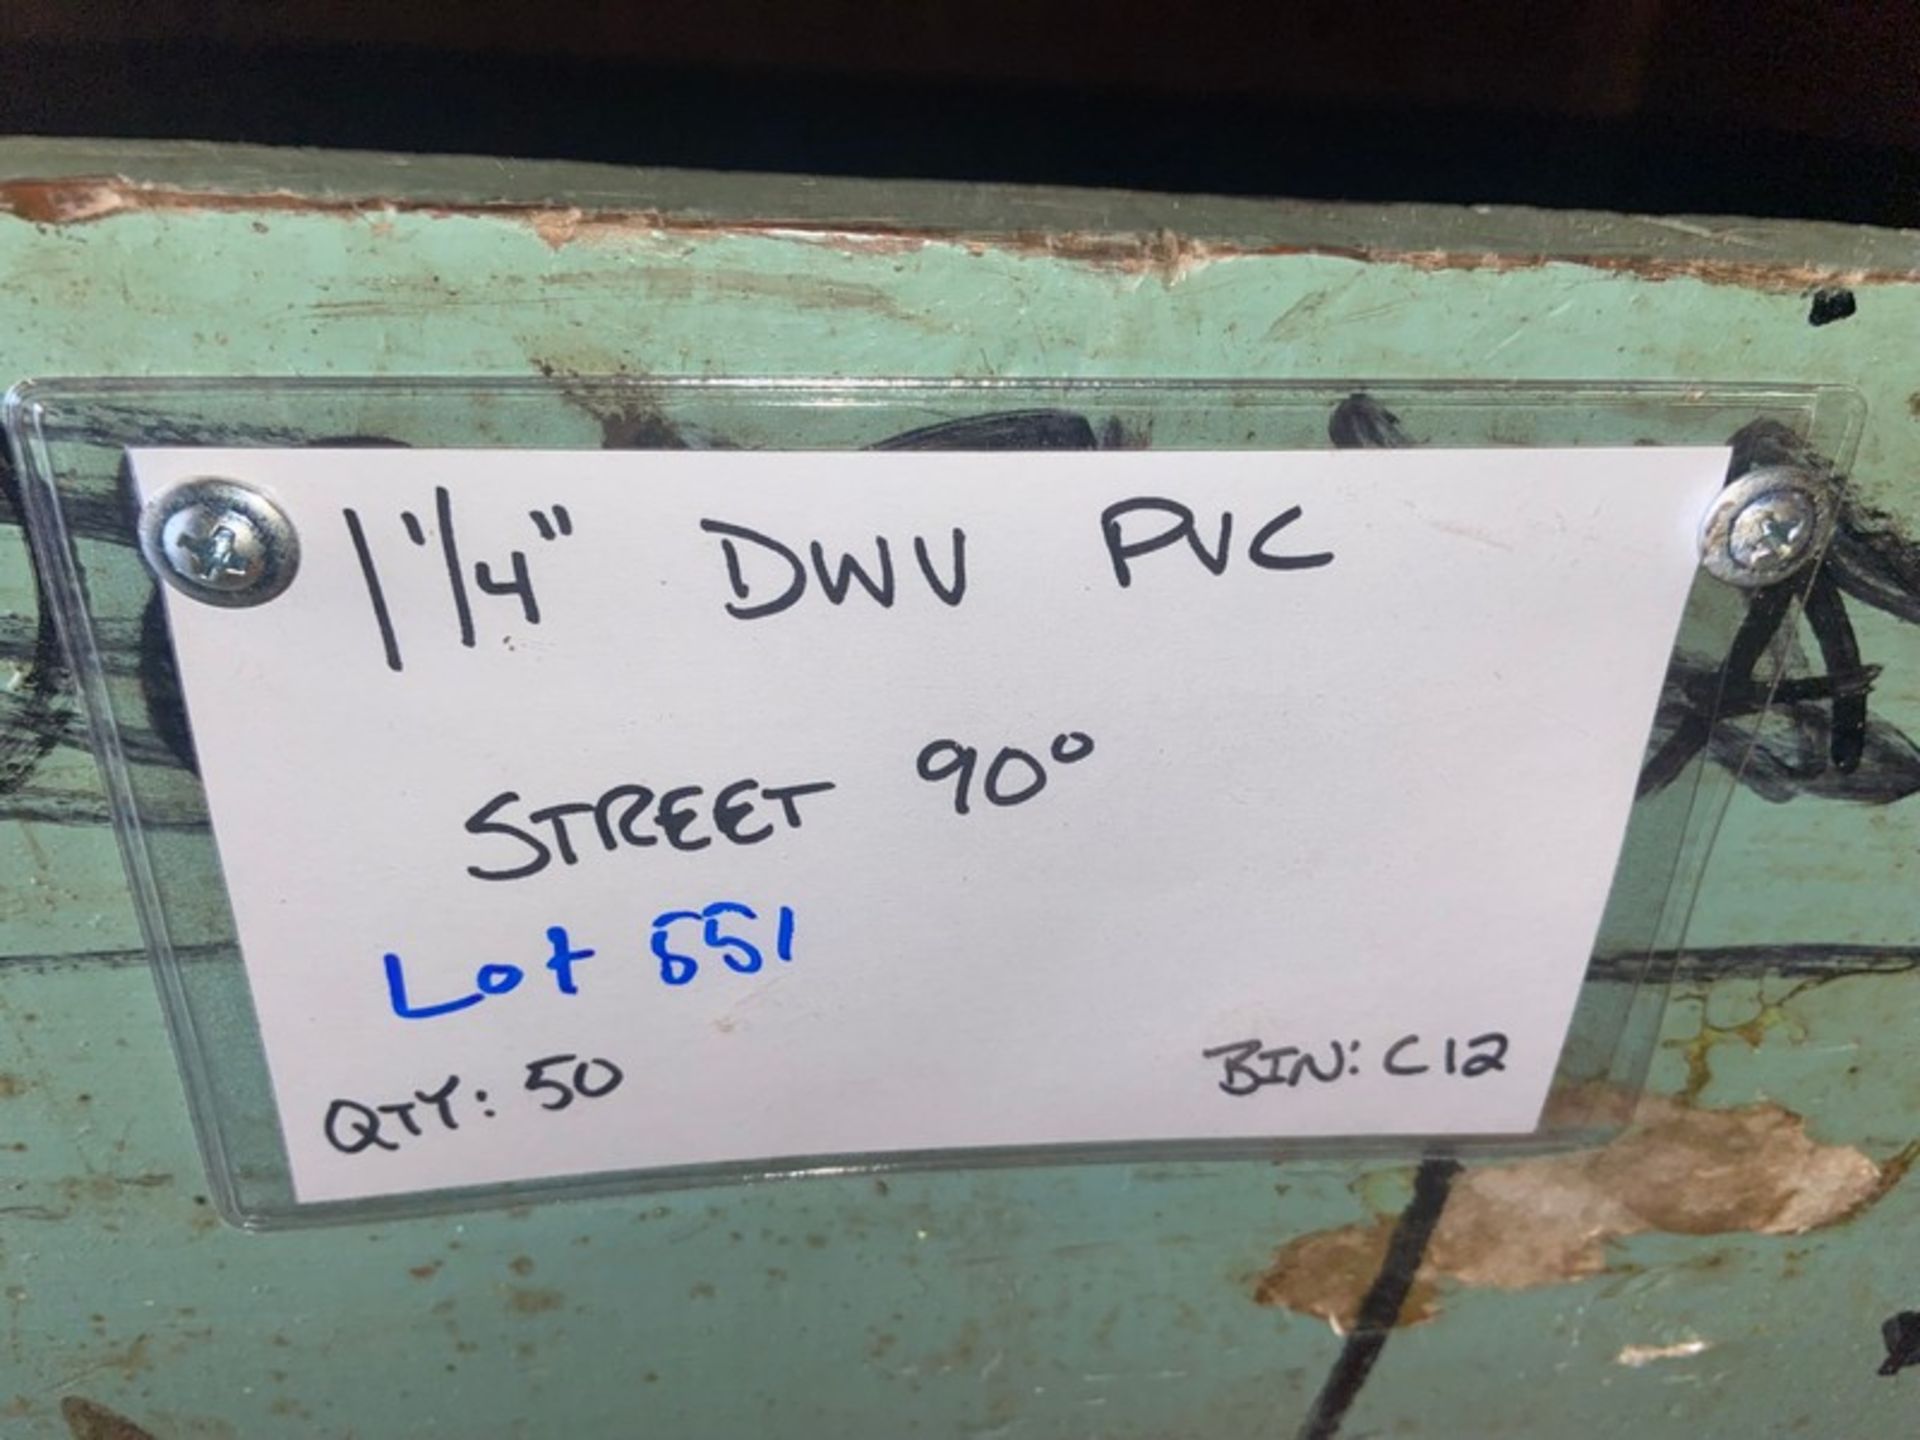 (50) 1 1/4” DWV PVC STREET 90’ (Bin:C12)(LOCATED IN MONROEVILLE, PA) - Image 2 of 4